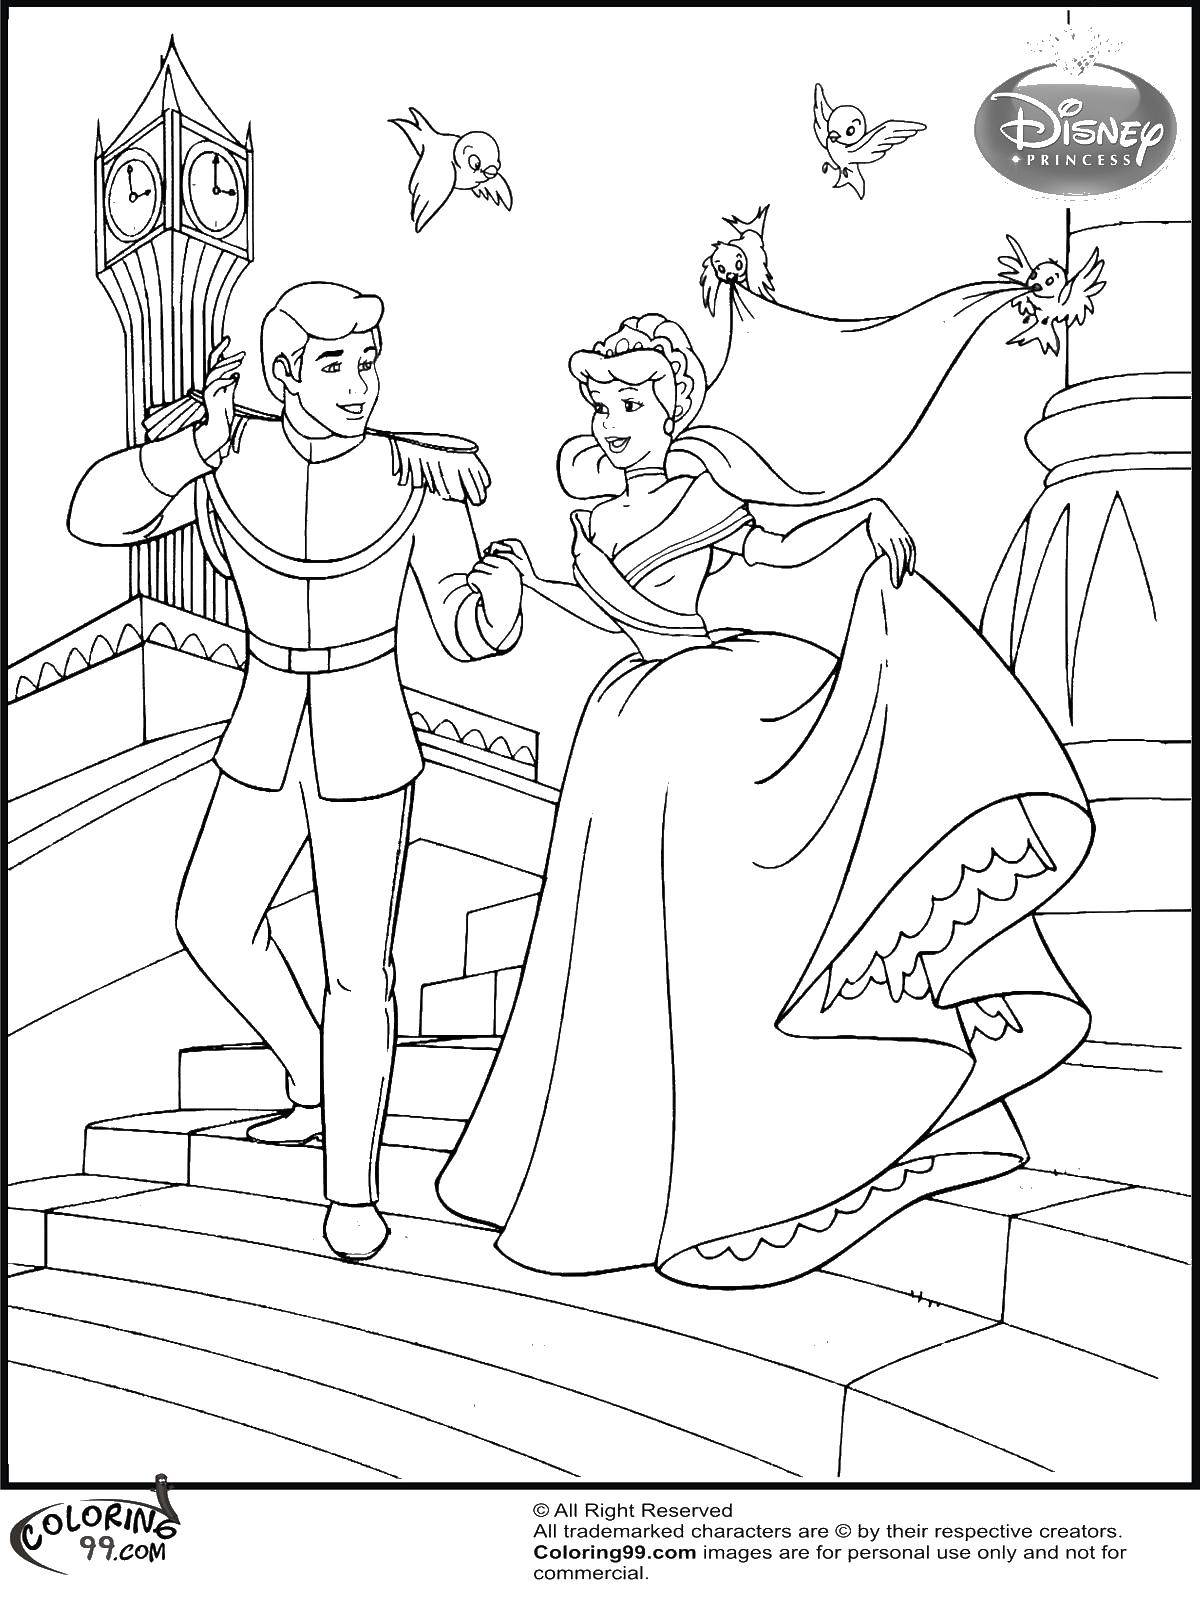 Coloring The Prince and Cinderella. Category Disney cartoons. Tags:  Cinderella, Prince, birds.